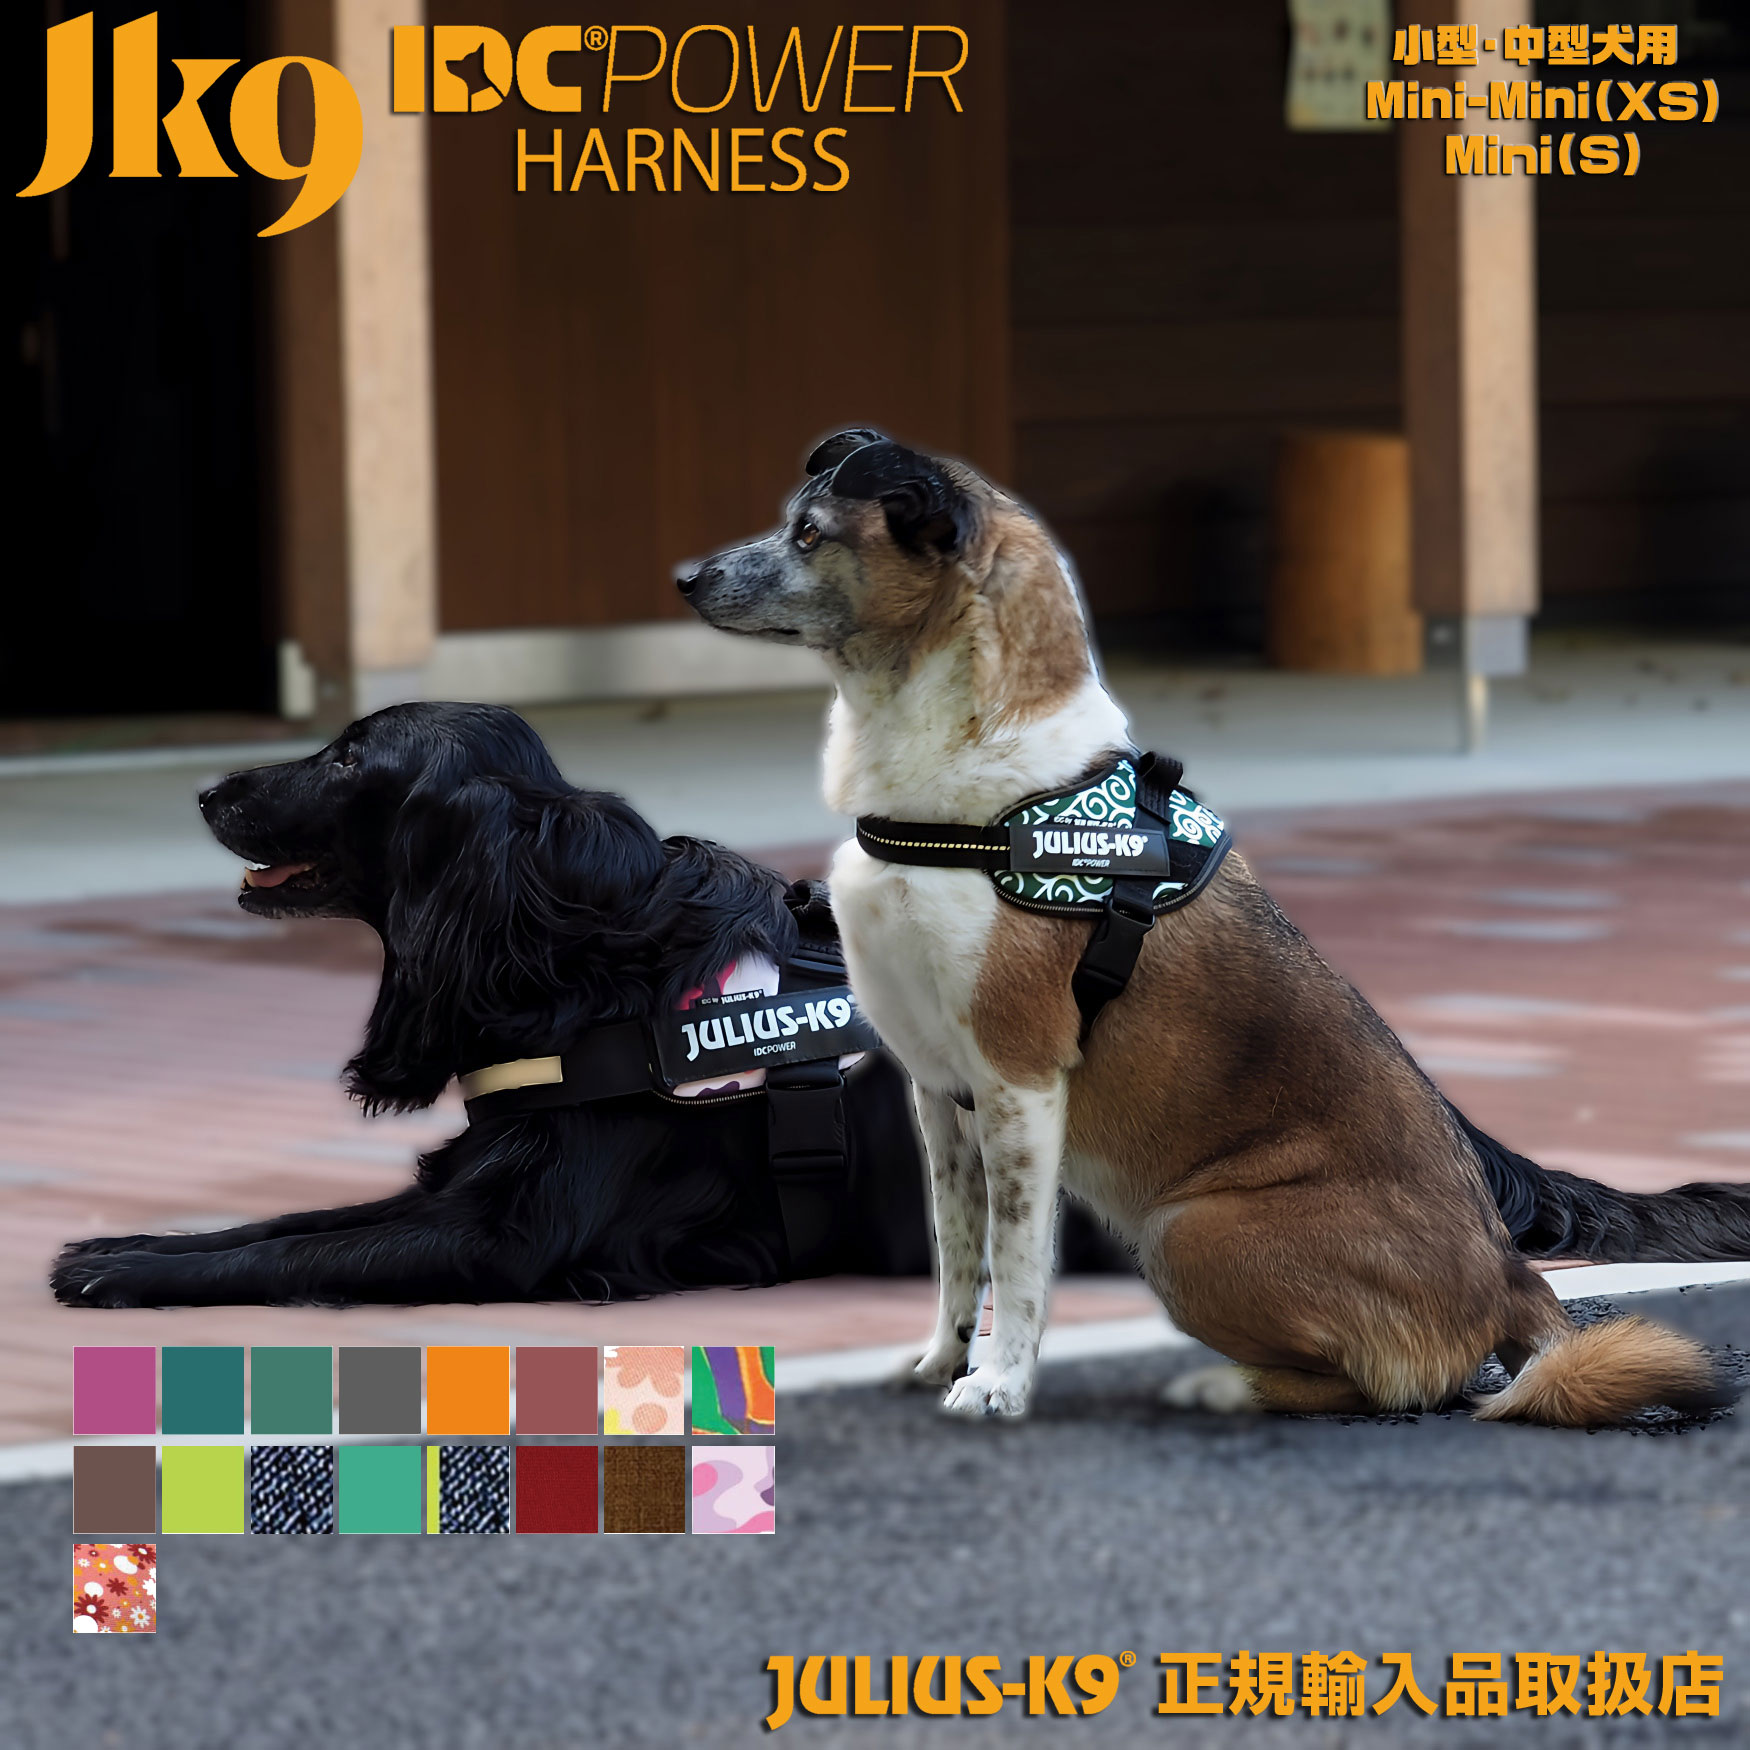 IDCパワーハーネス Mini Mini・Mini 胸囲40-67cm  Julius-K9 ユリウスケーナイン ユリウスK9 ハーネス 犬 ユリウスk9 小型犬 中型犬 犬用ハーネス 犬用 胴輪 